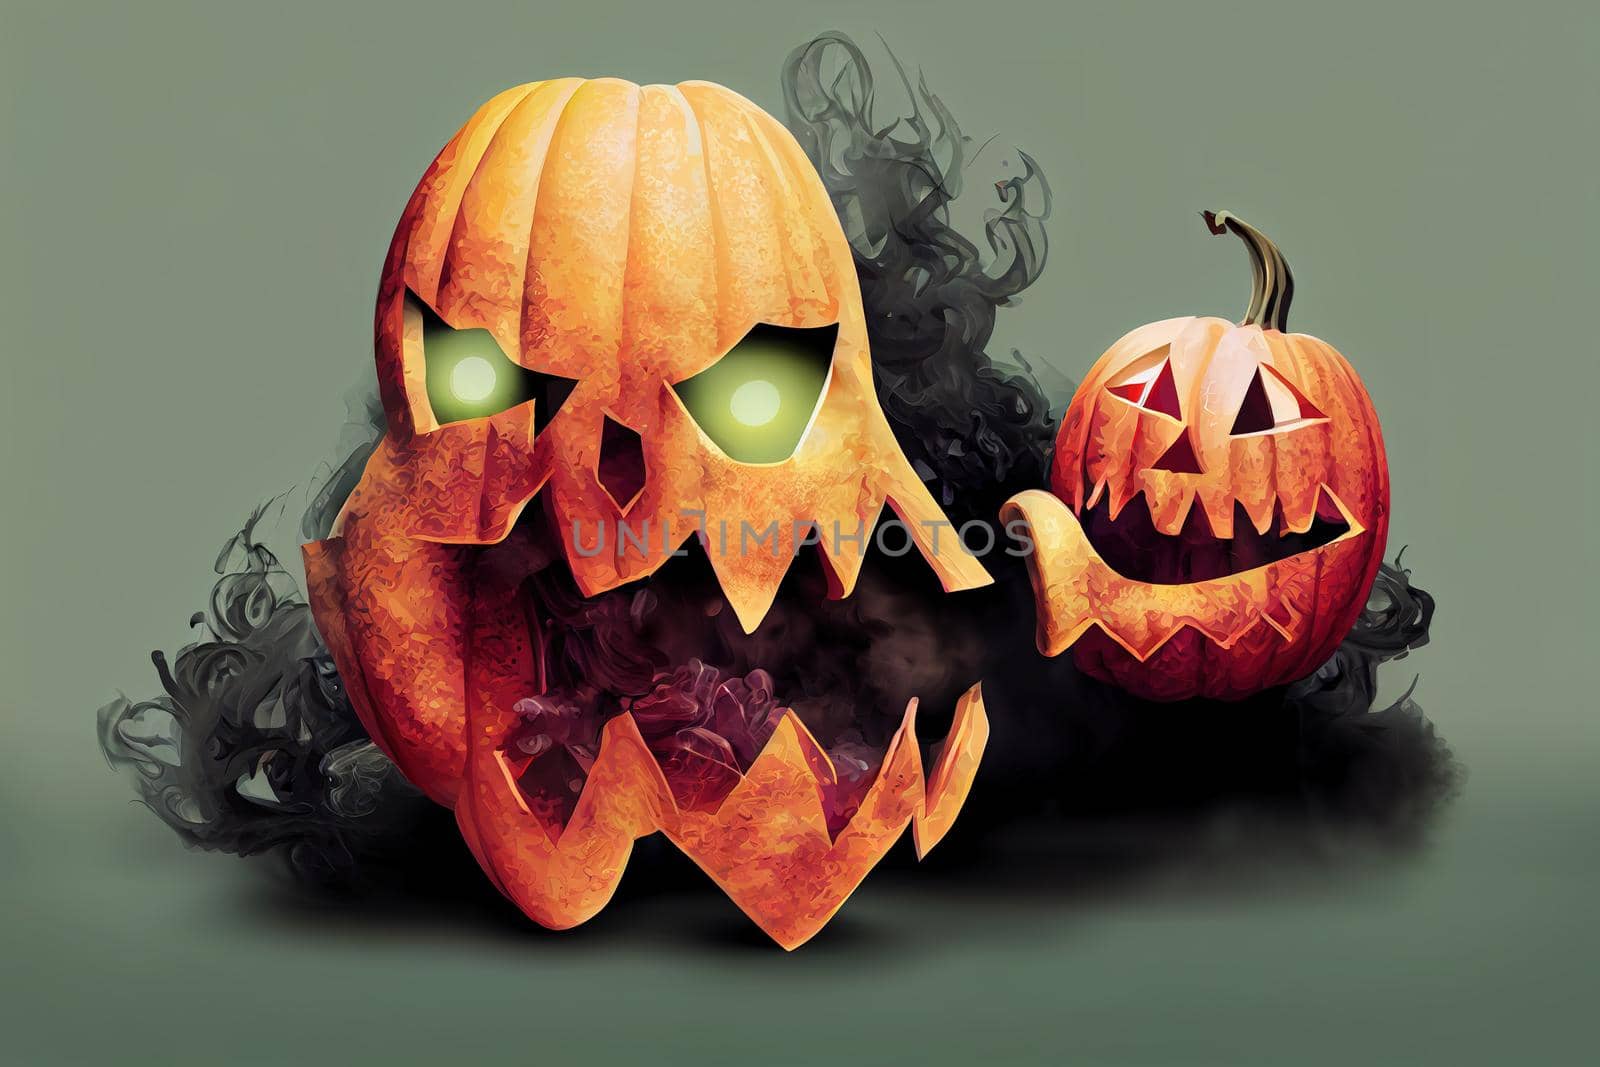 a halloween zombie with a pumpkin head by 2ragon